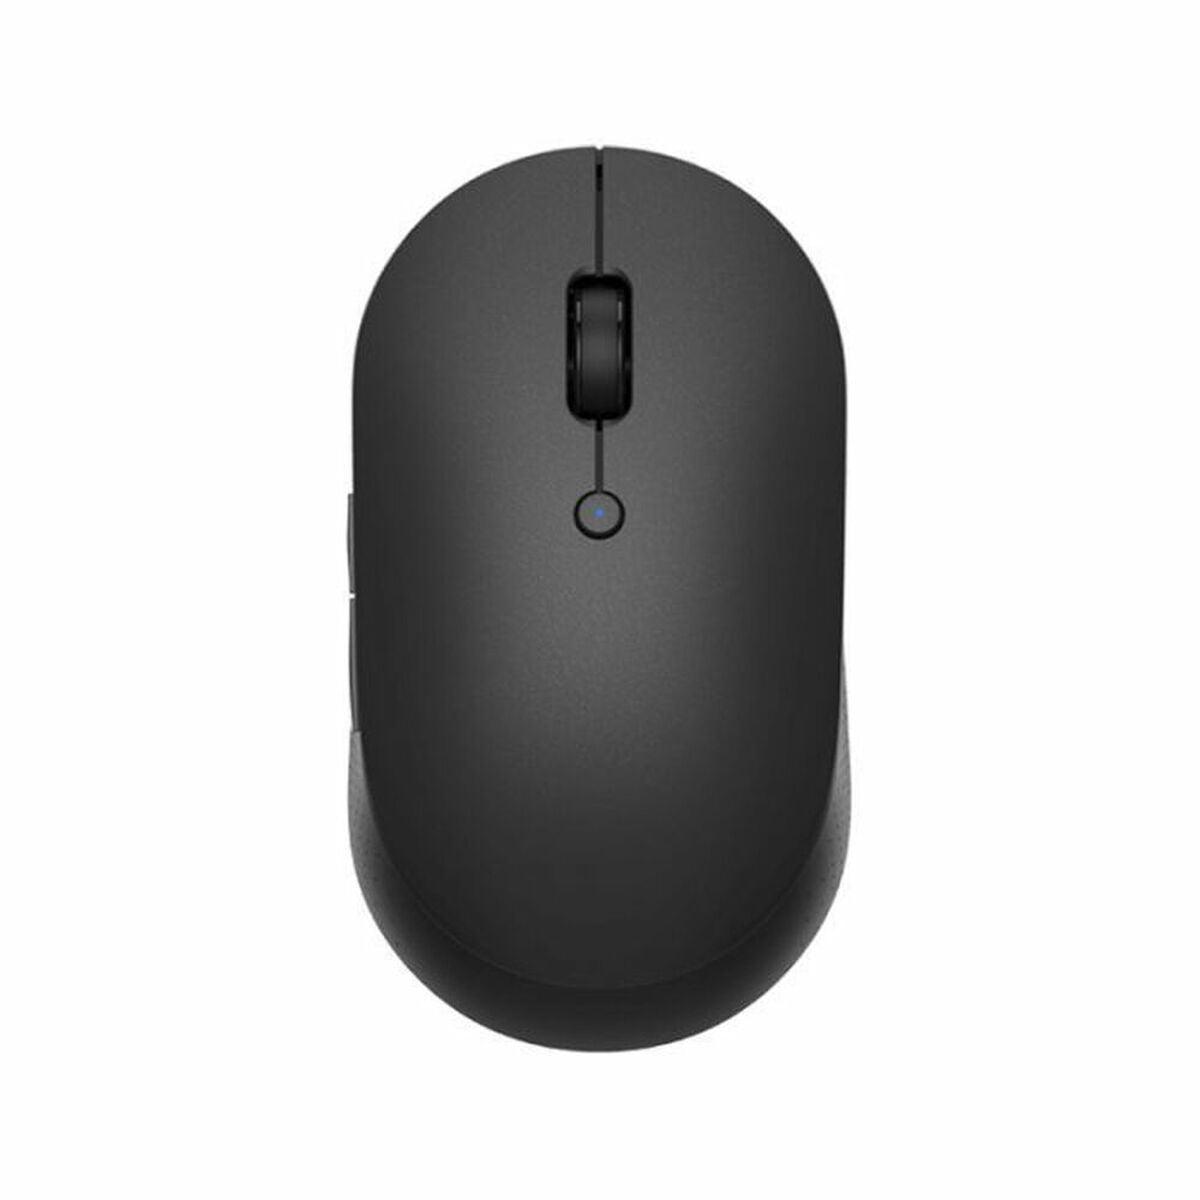 Mouse Xiaomi Silent Edition Wireless Black (1 Unit)